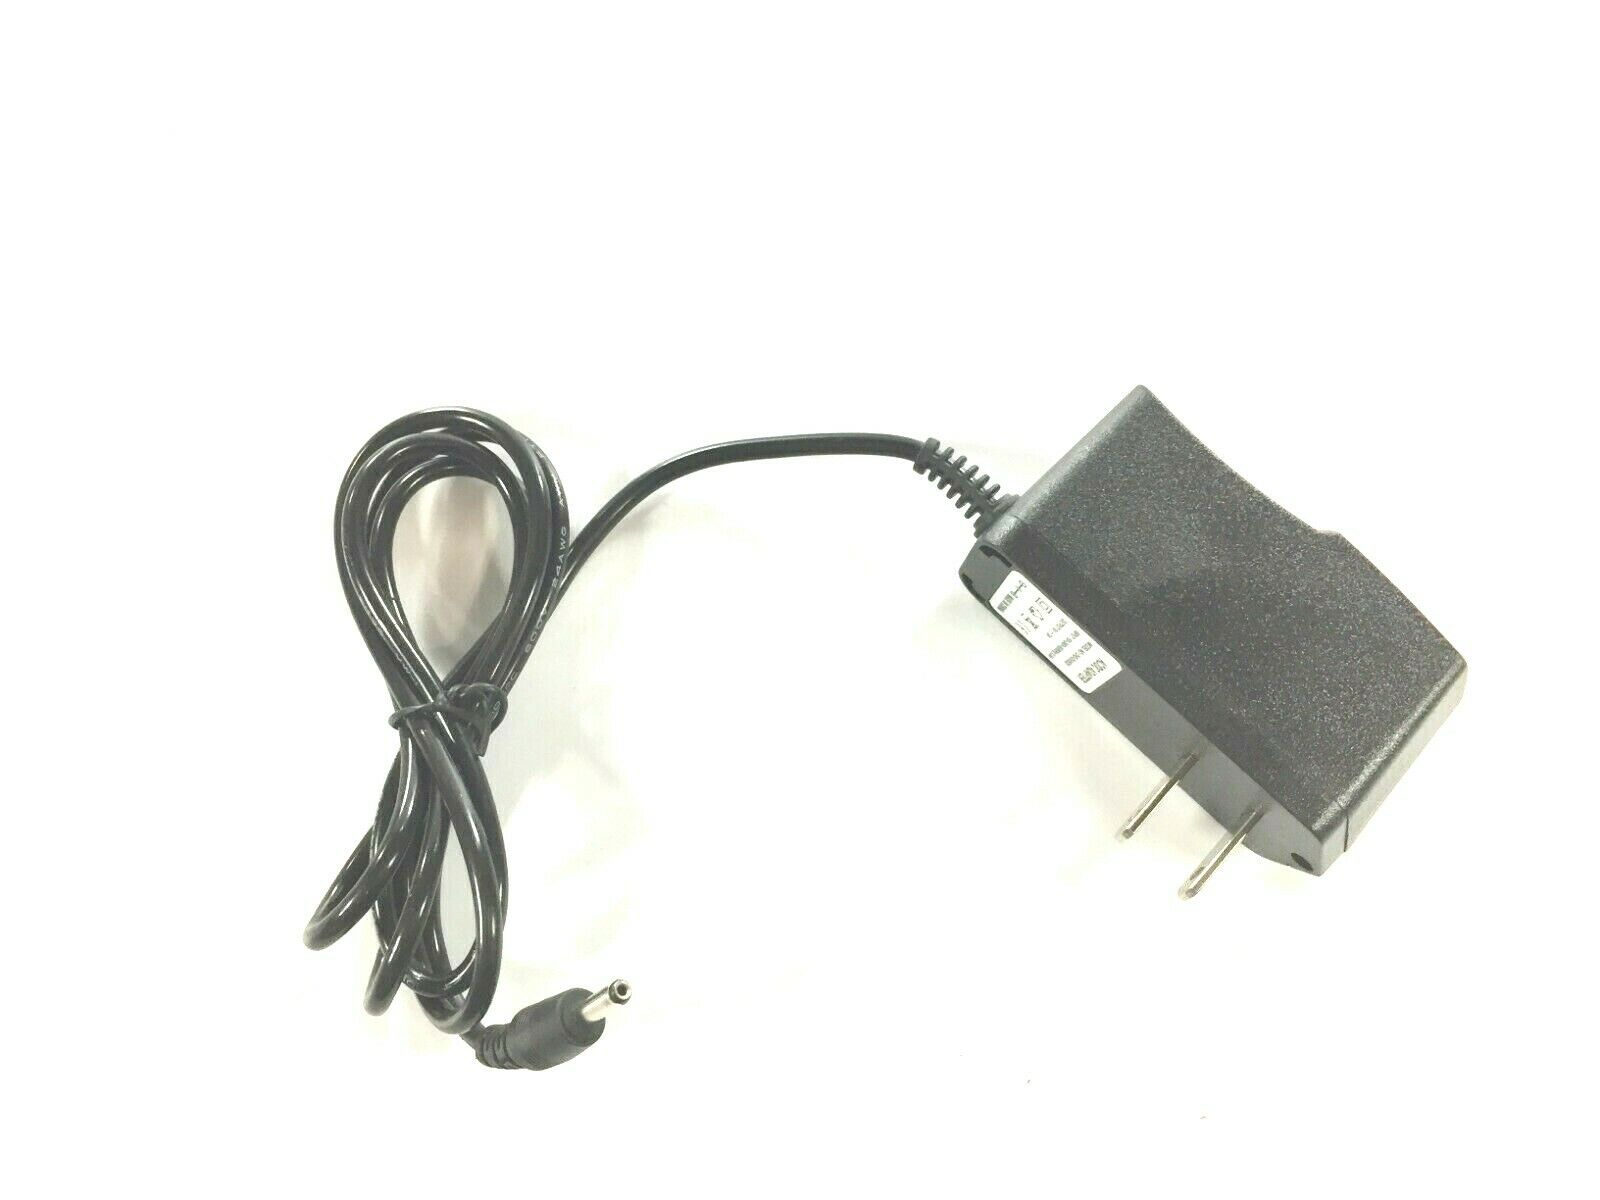 Ac/Dc Adapter Model CHD-DU0520 Input: 100-240V- 50/60Hz 0.5A OutPut 5V Dc 2A Type: Power Supply MPN: CHD-DU0520 Ou